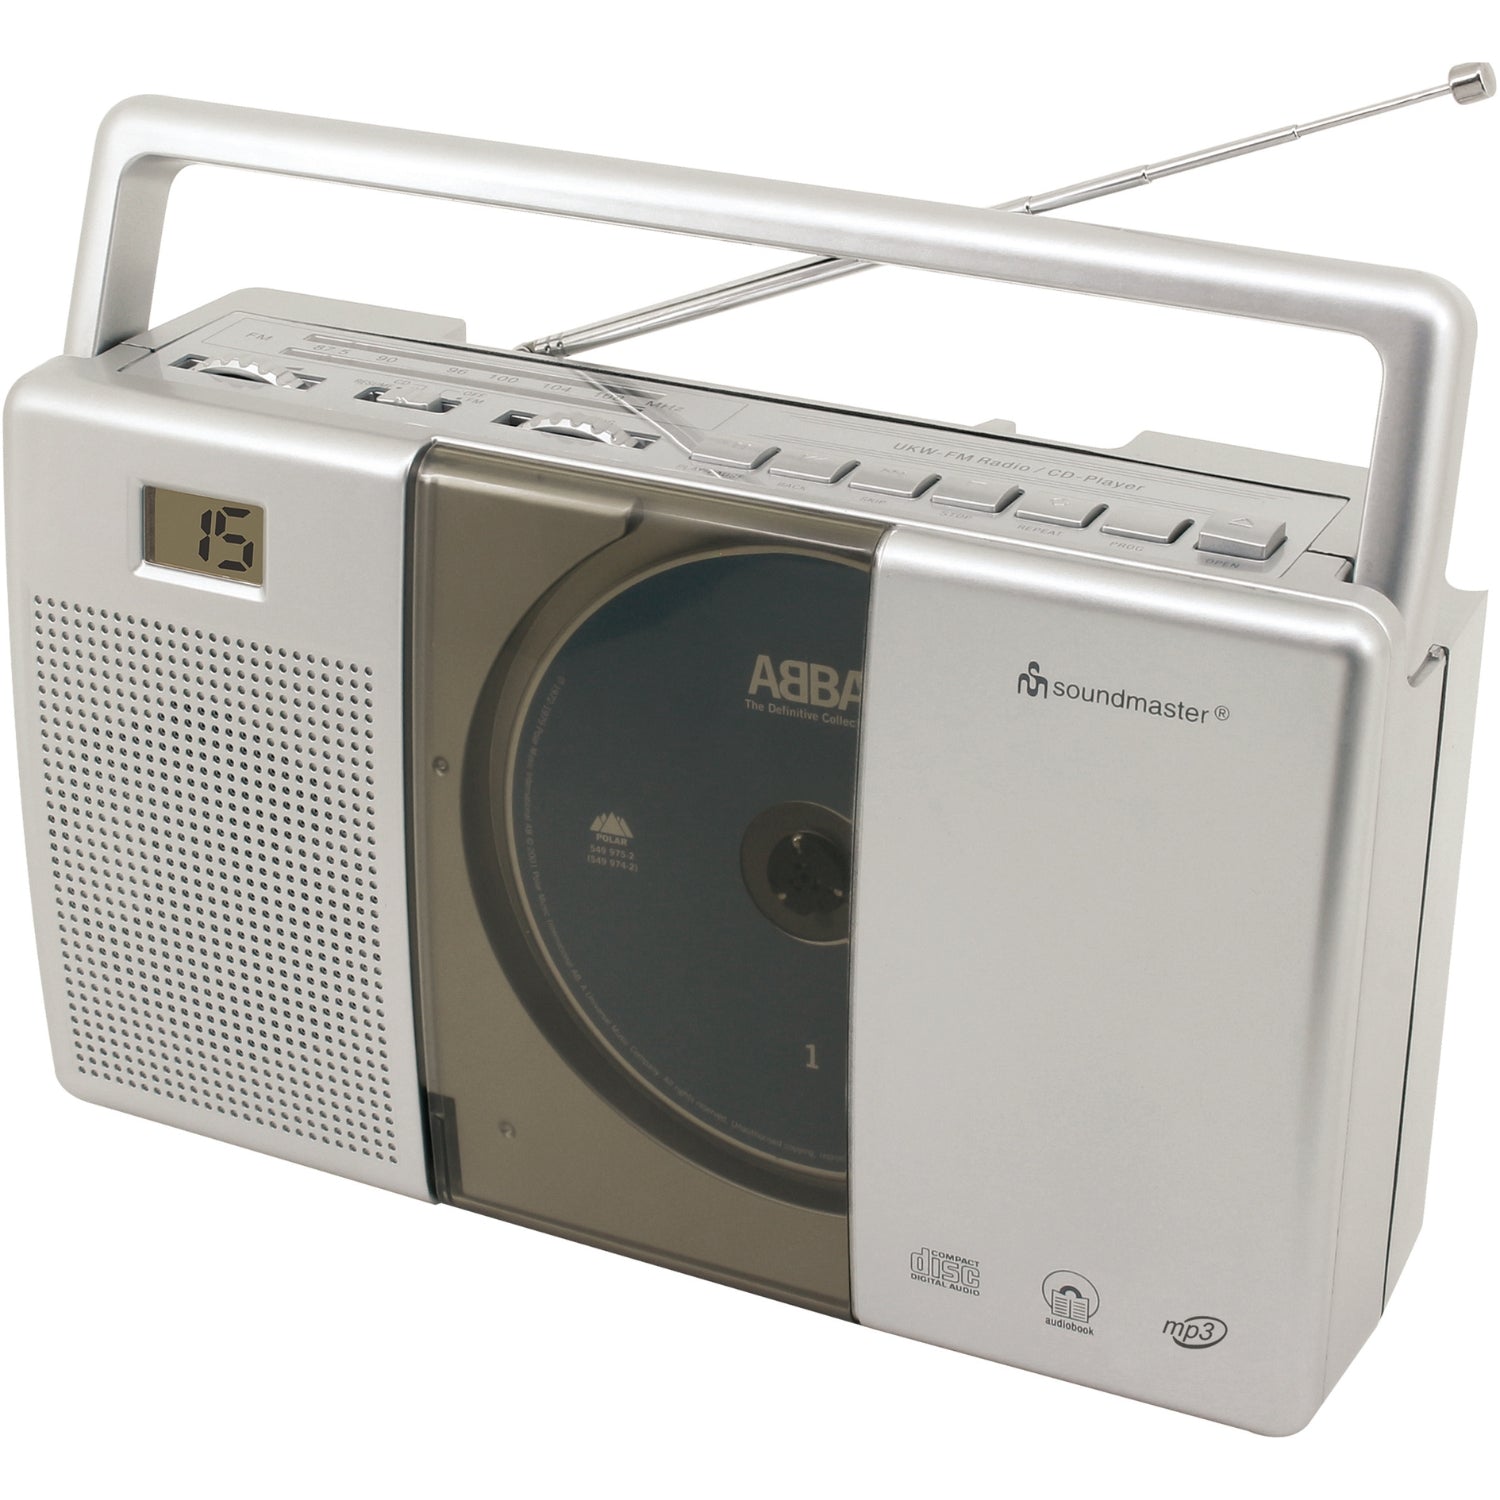 Soundmaster RCD1185 tragbares Radio mit CD-Player Hörbuchfunktion Kofferradio Küchenradio